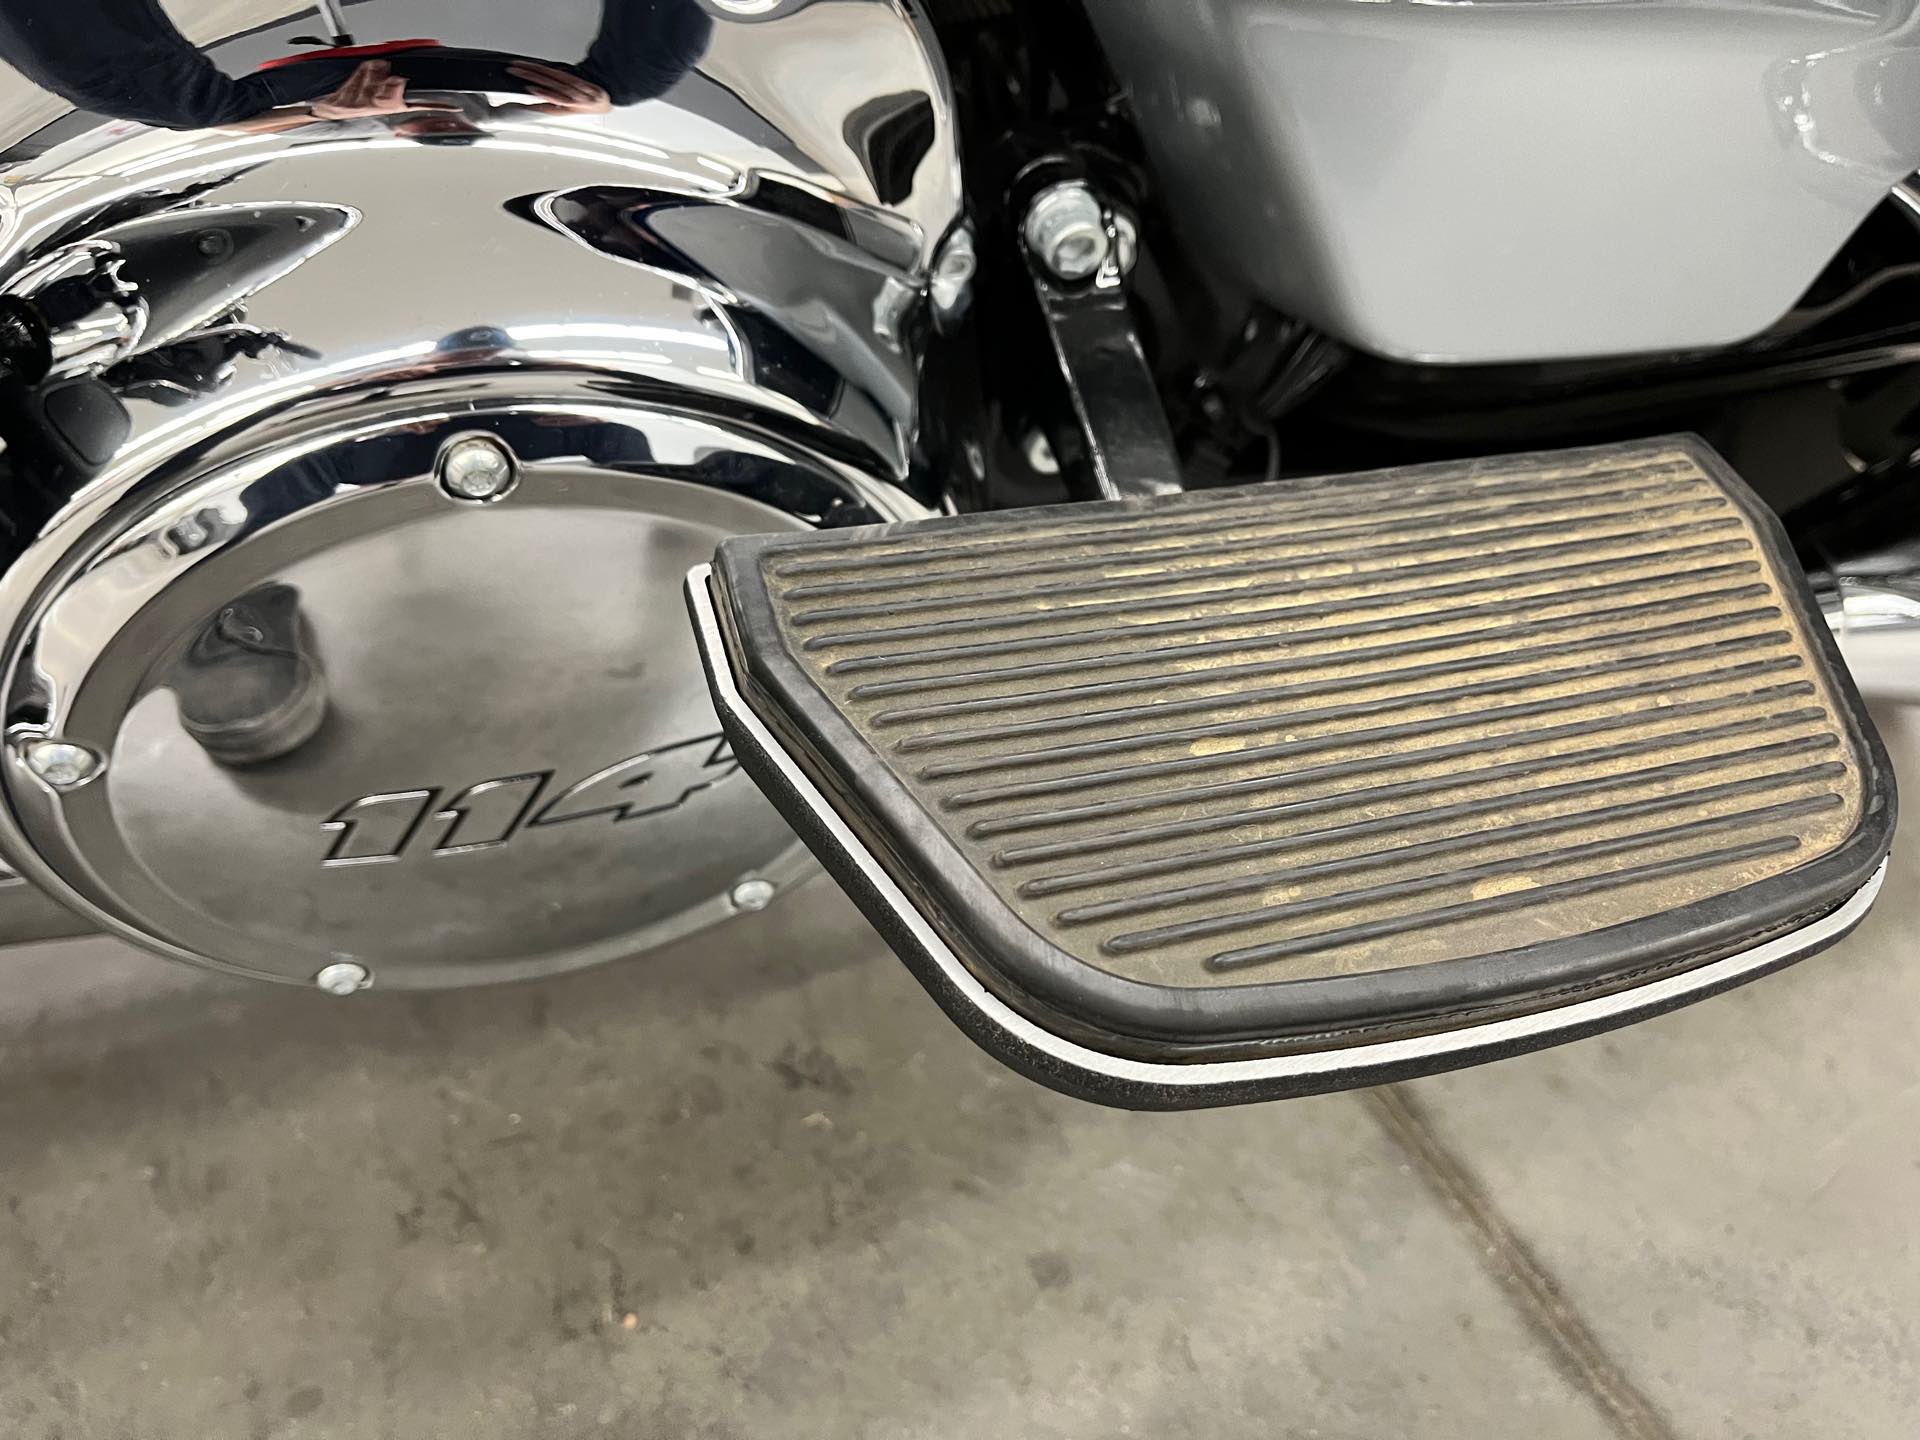 2019 Harley-Davidson Electra Glide Ultra Limited at Aces Motorcycles - Denver